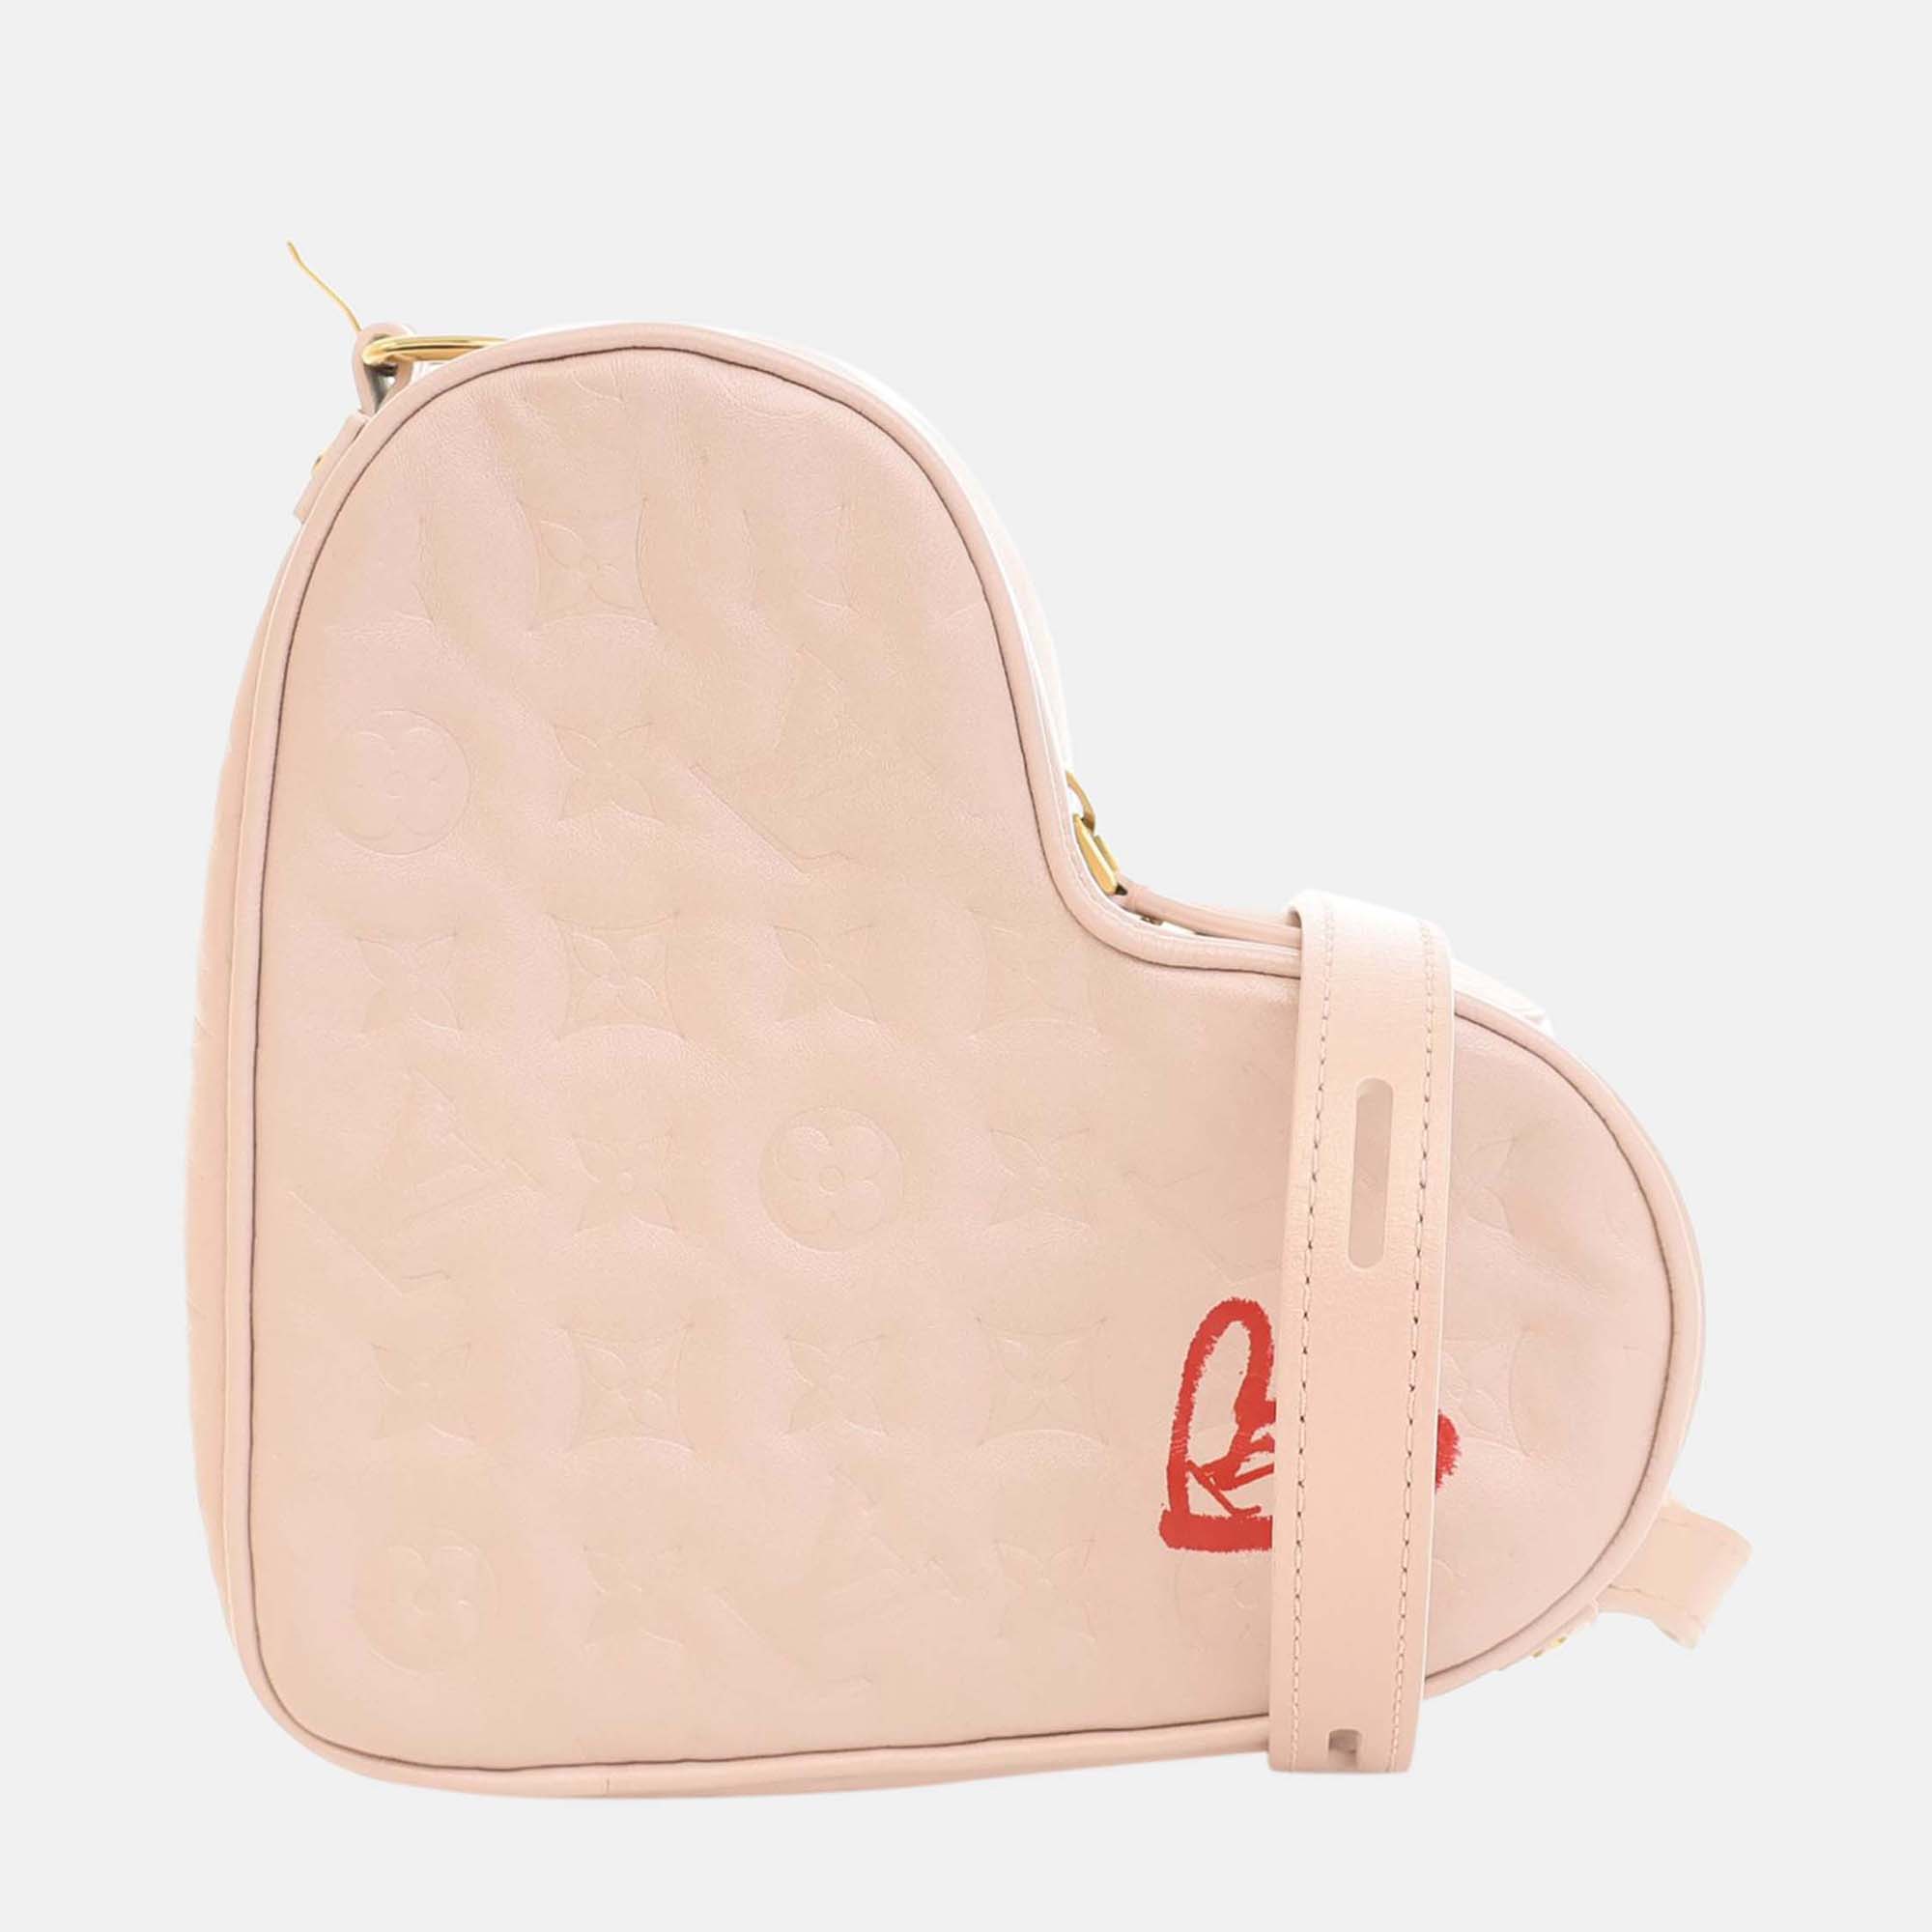 Louis vuitton light pink monogram empriente leather fall in love sac coeur shoulder bag